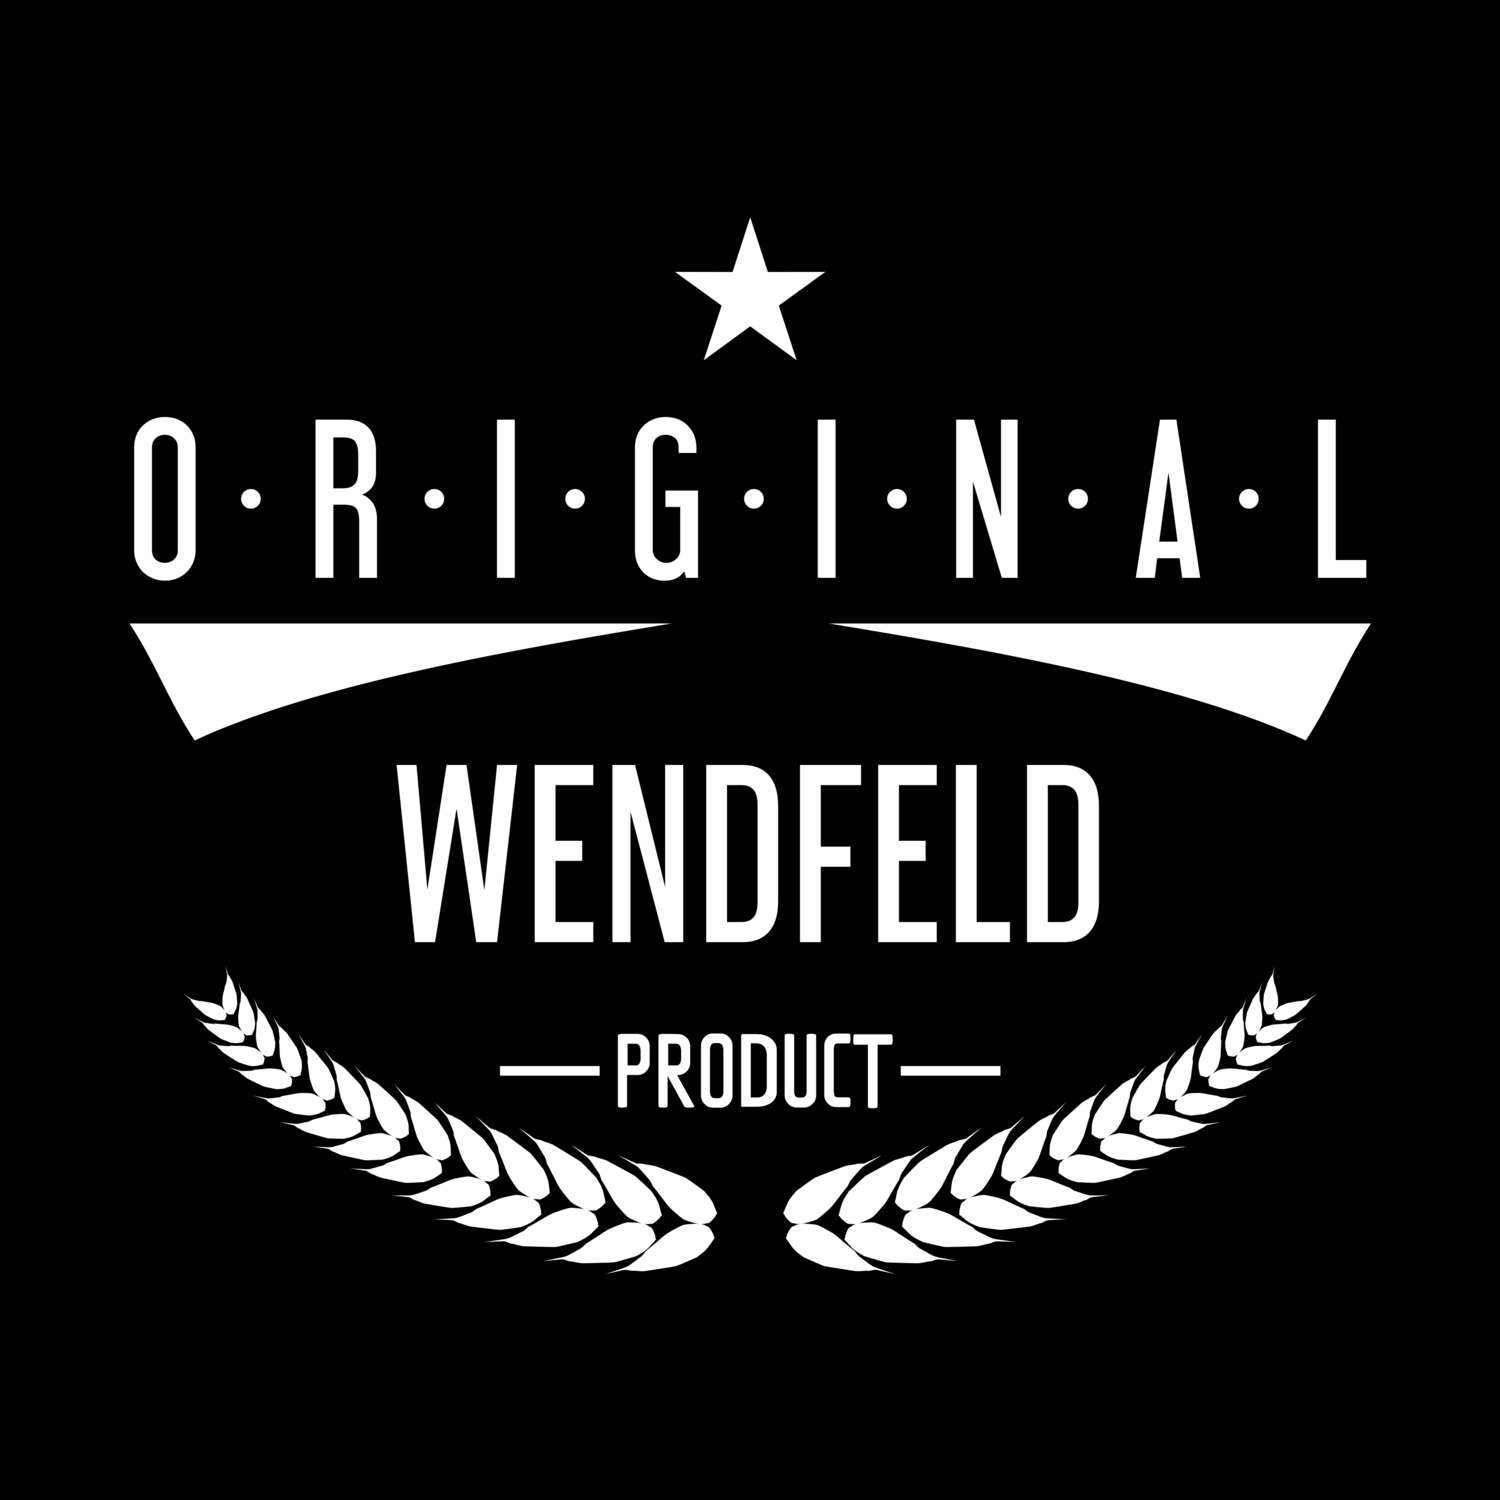 Wendfeld T-Shirt »Original Product«